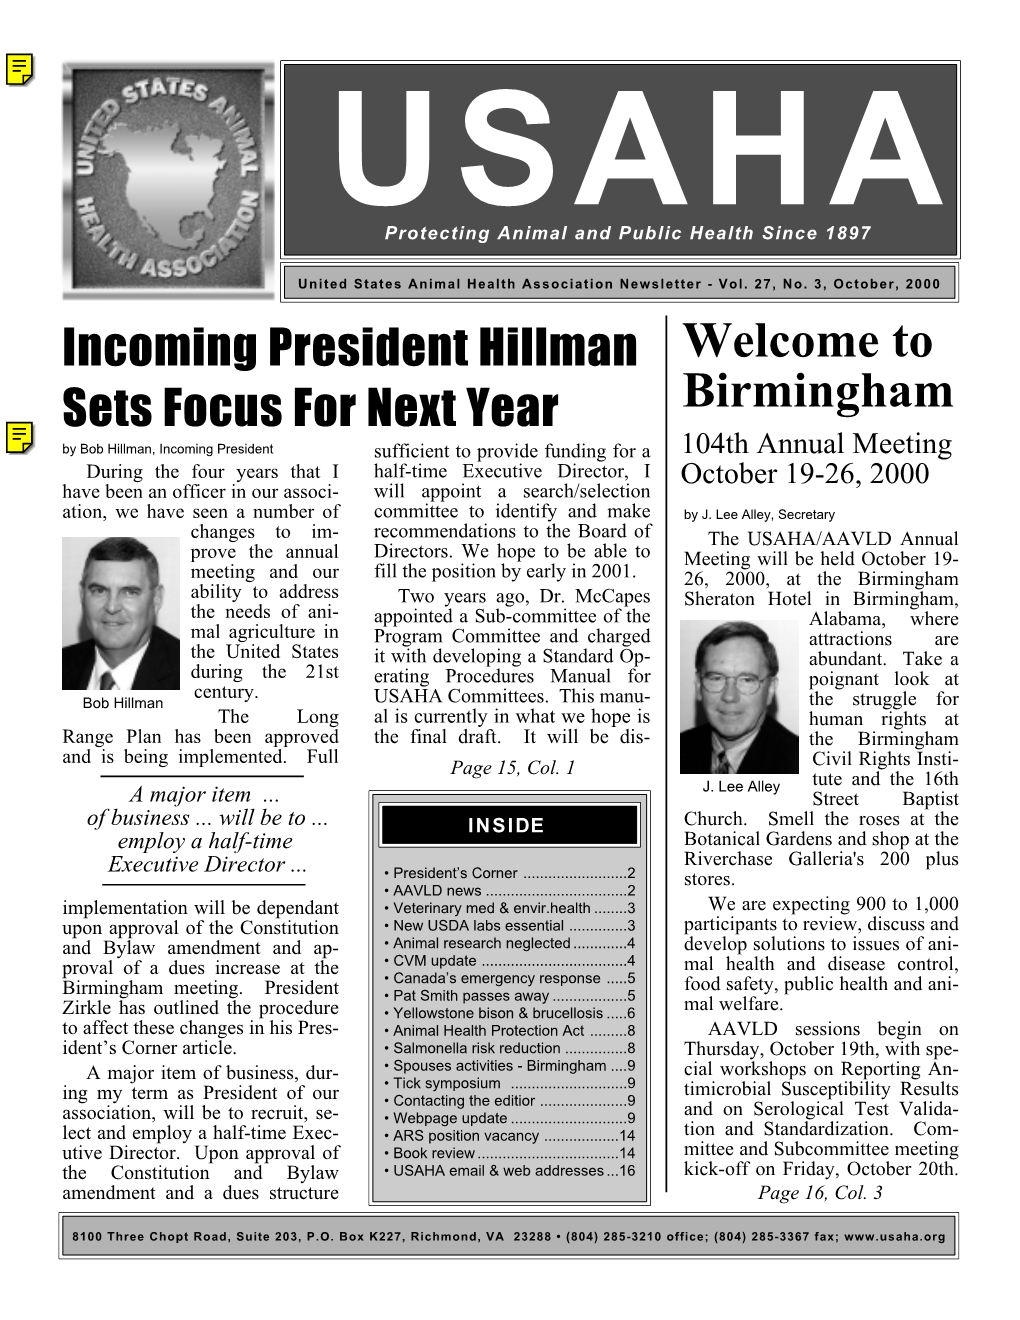 USAHA Newsletter, Vol.27, No. 3, October, 2000